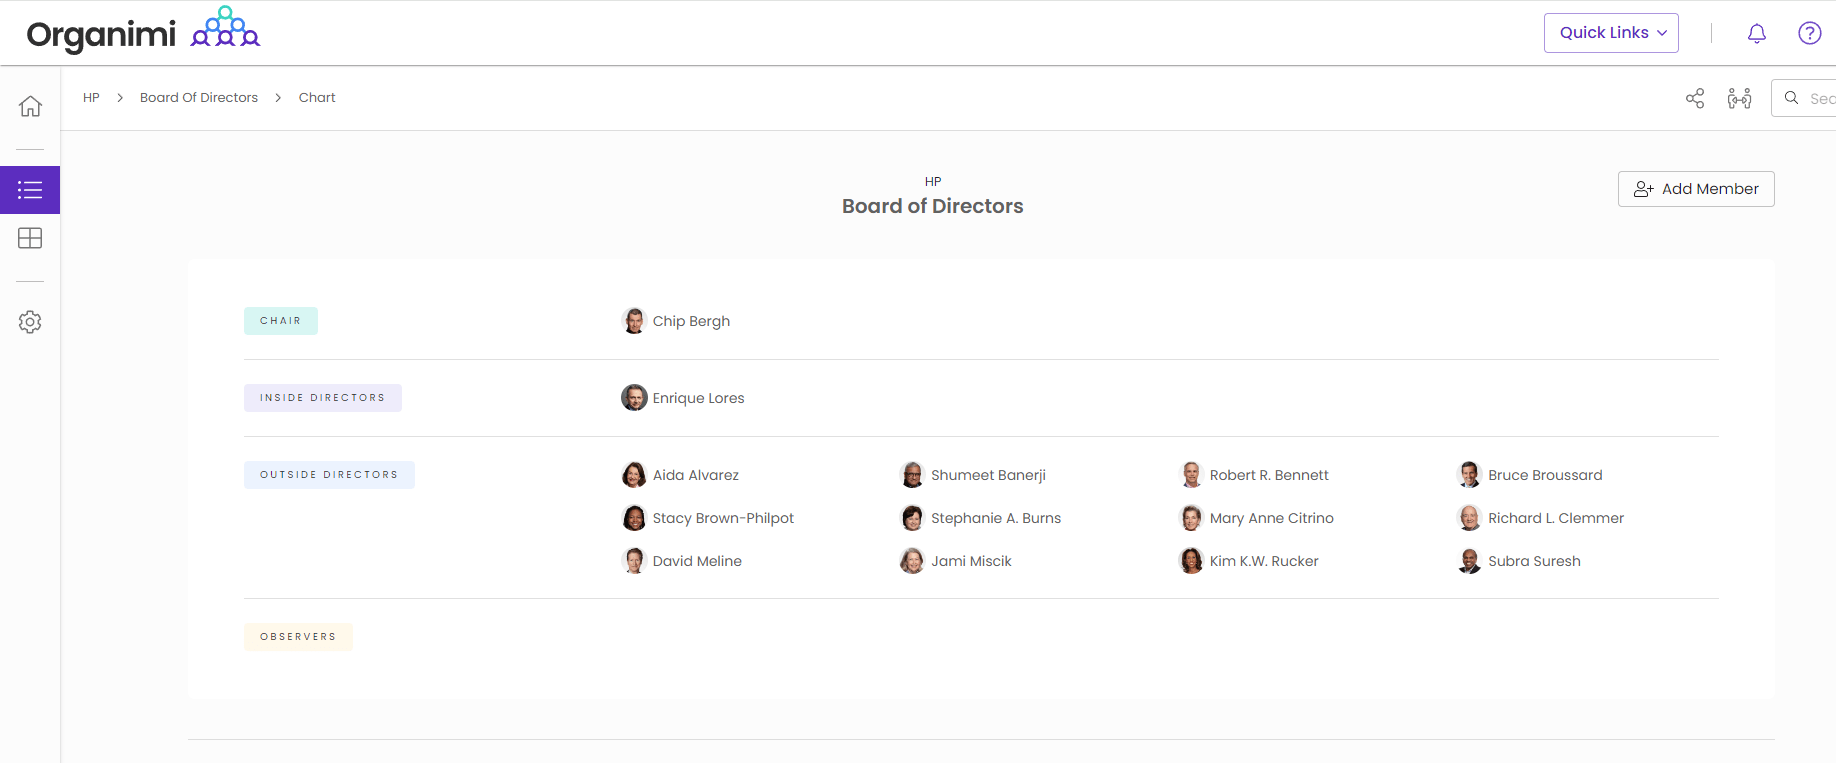 HP's Board of Directors Chart